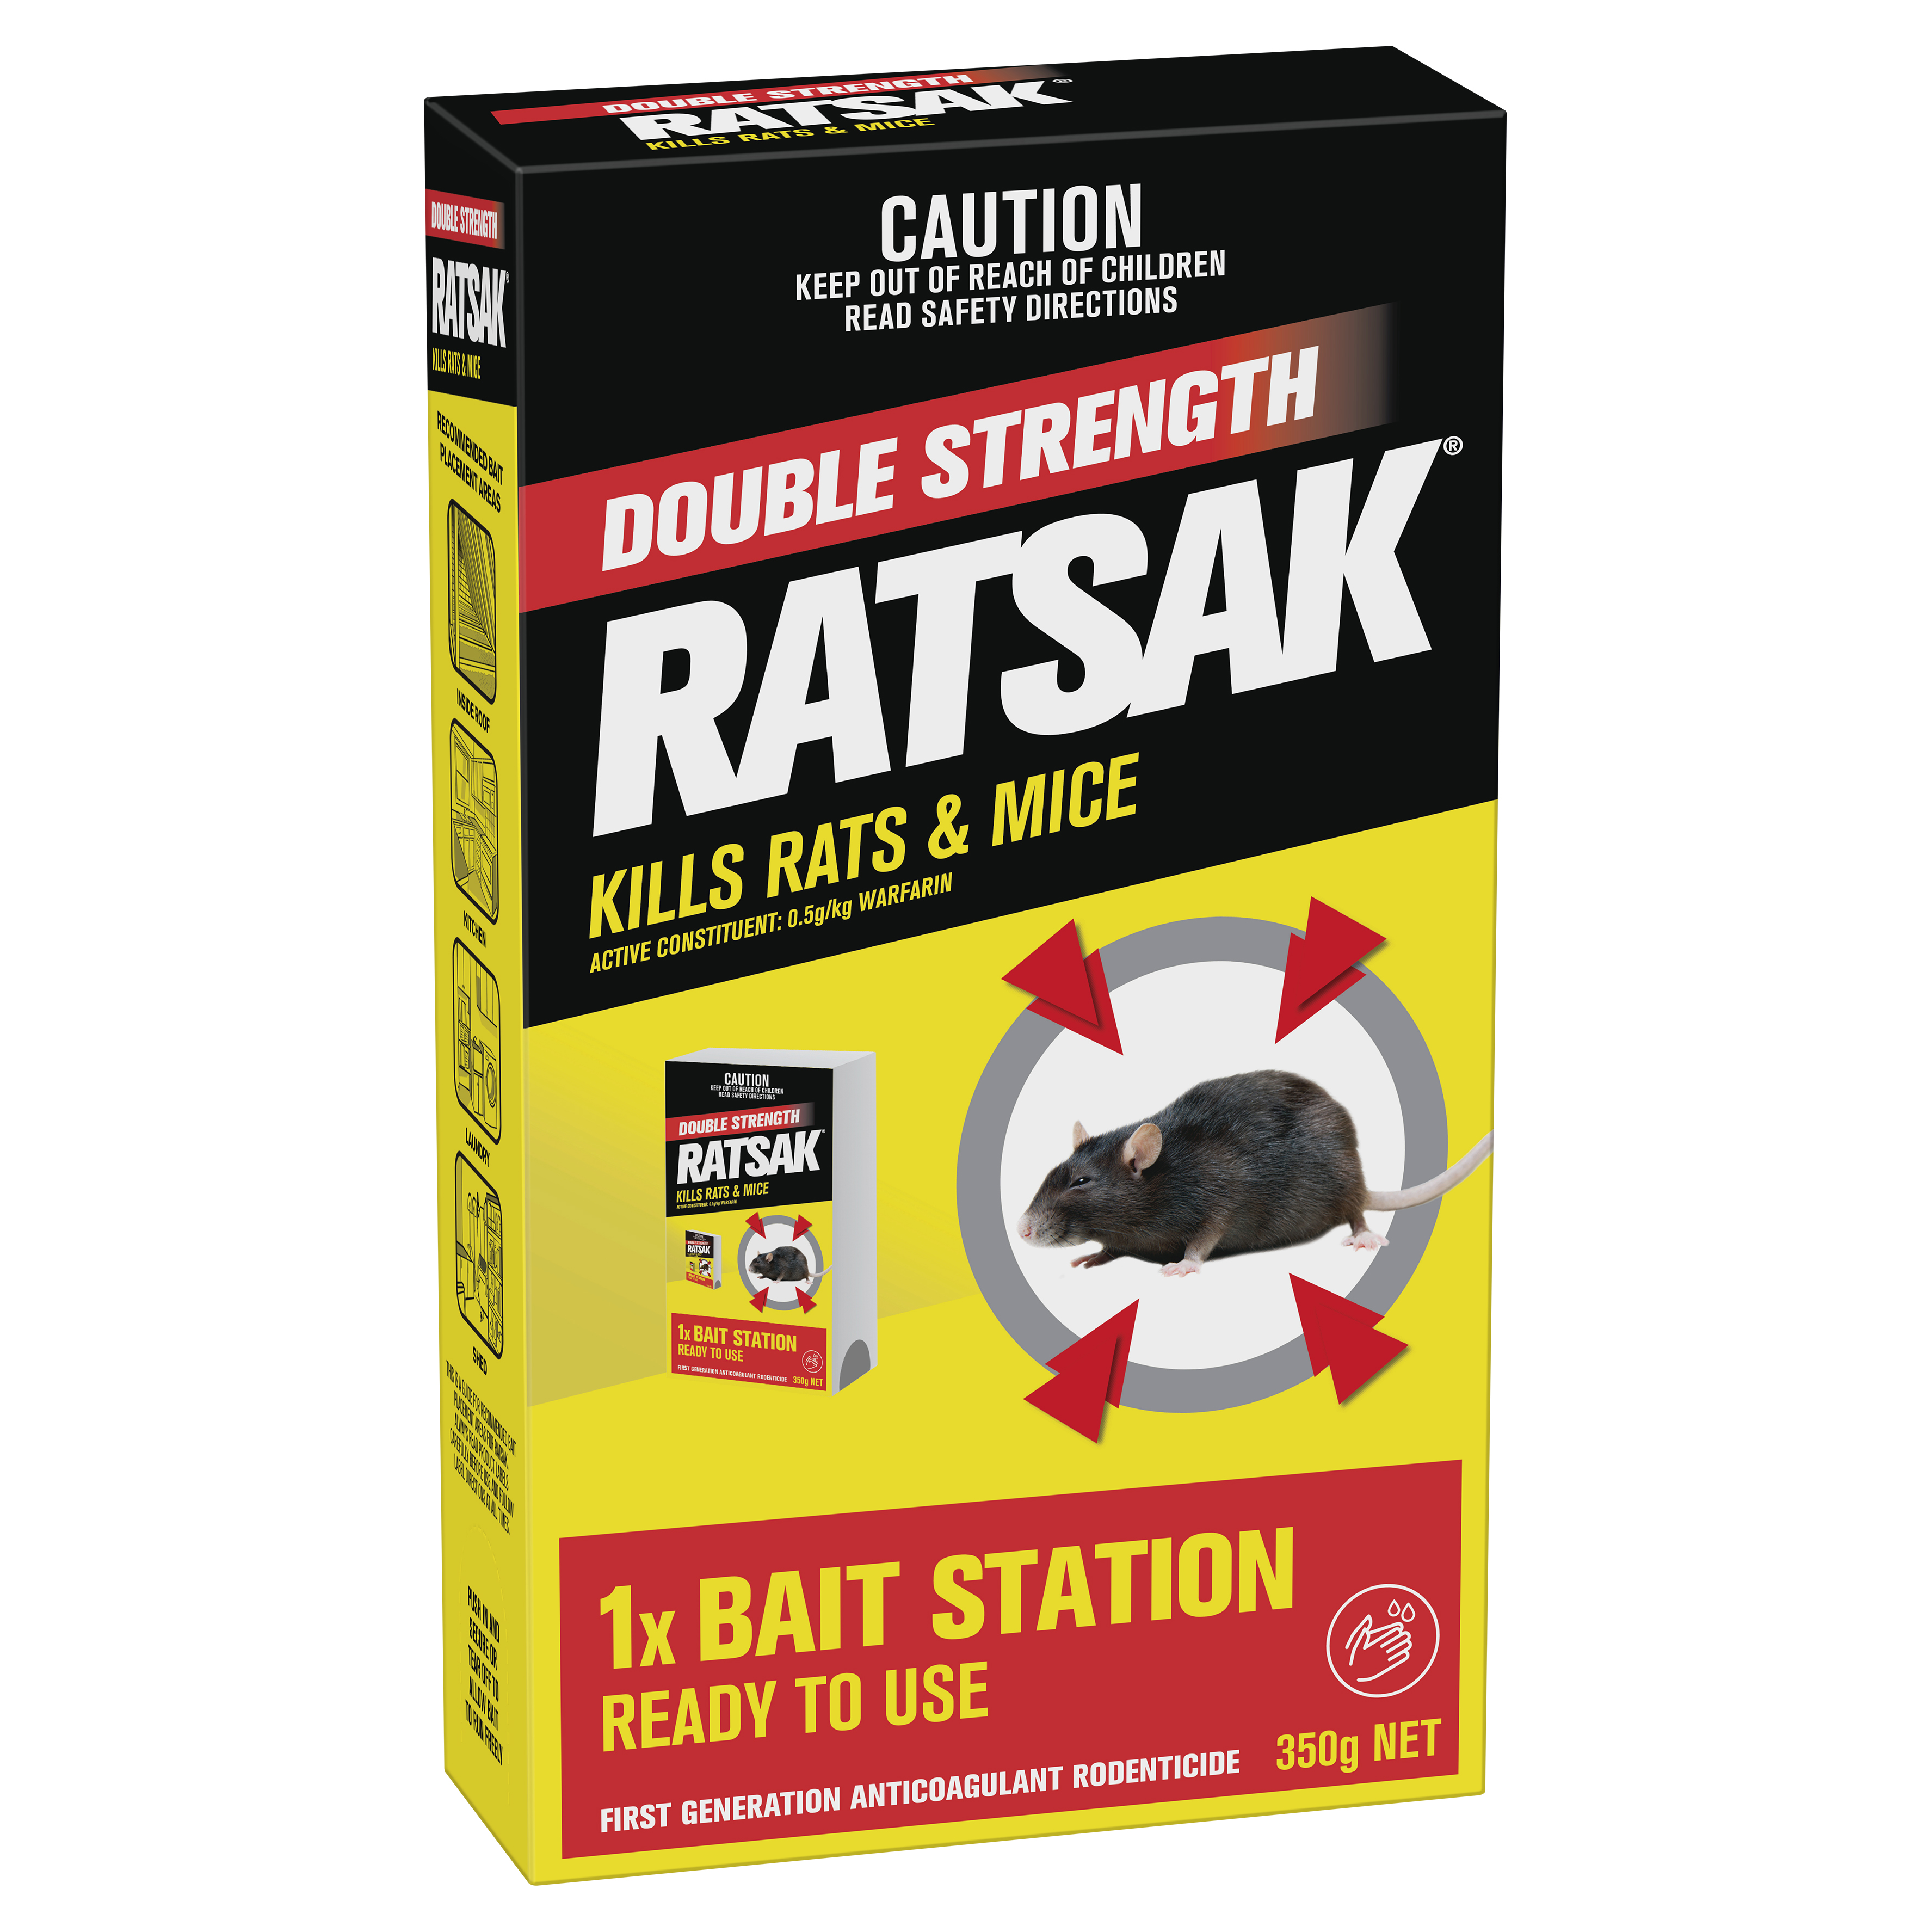 https://www.yates.com.au/media/yqdpga1q/56511_ratsak-double-strength-bait-station_fop.jpg